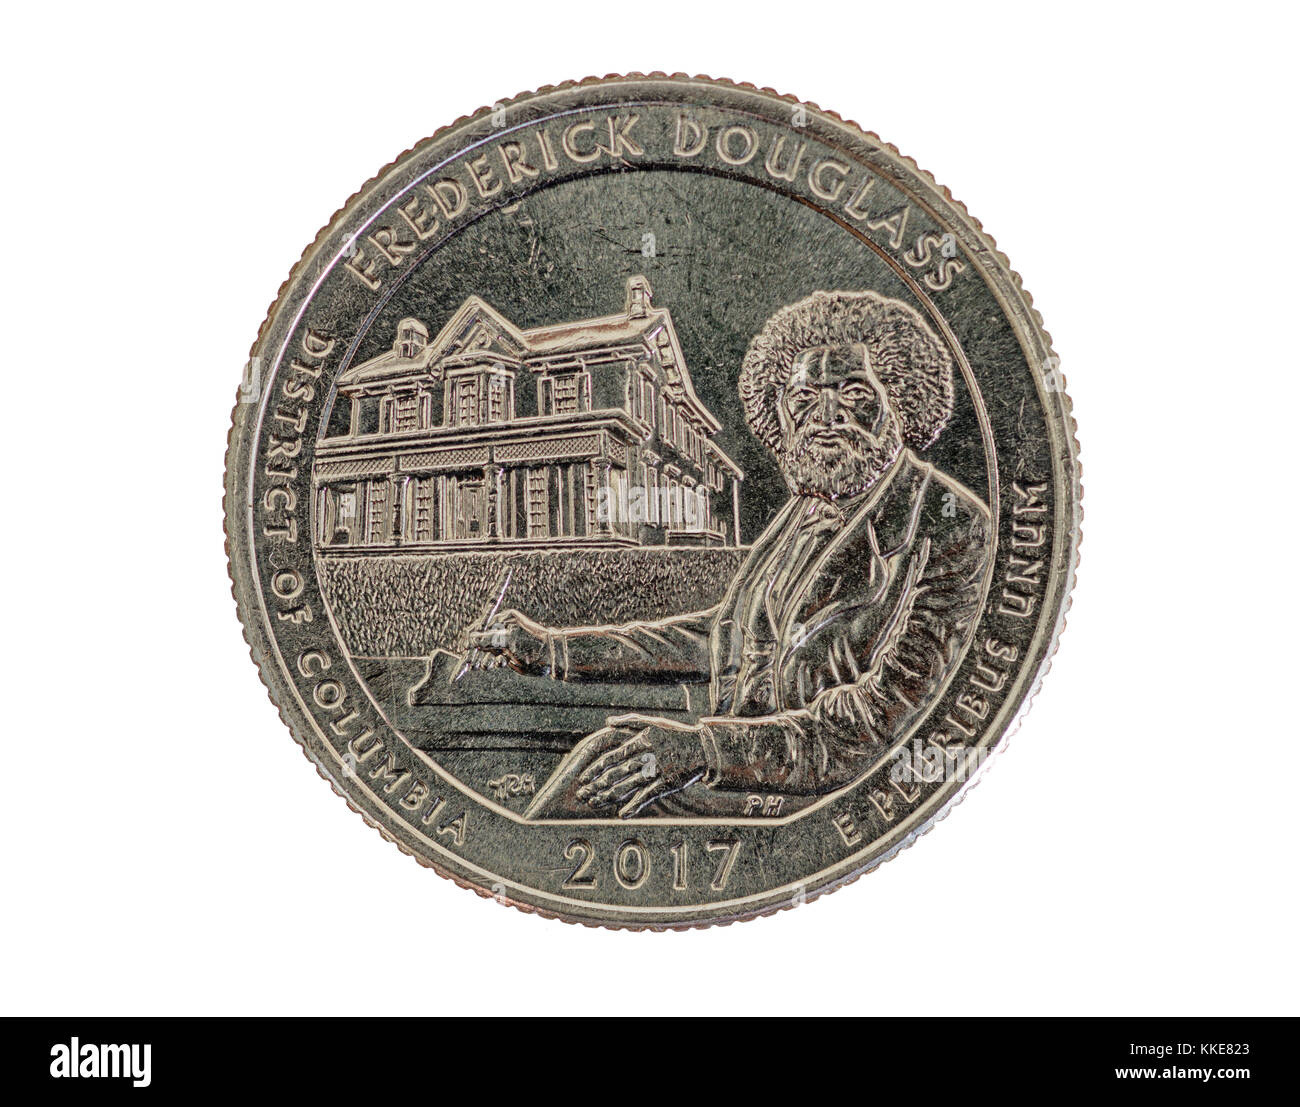 Frederick Douglass District of Columbia commemorative quarter coin Stock Photo